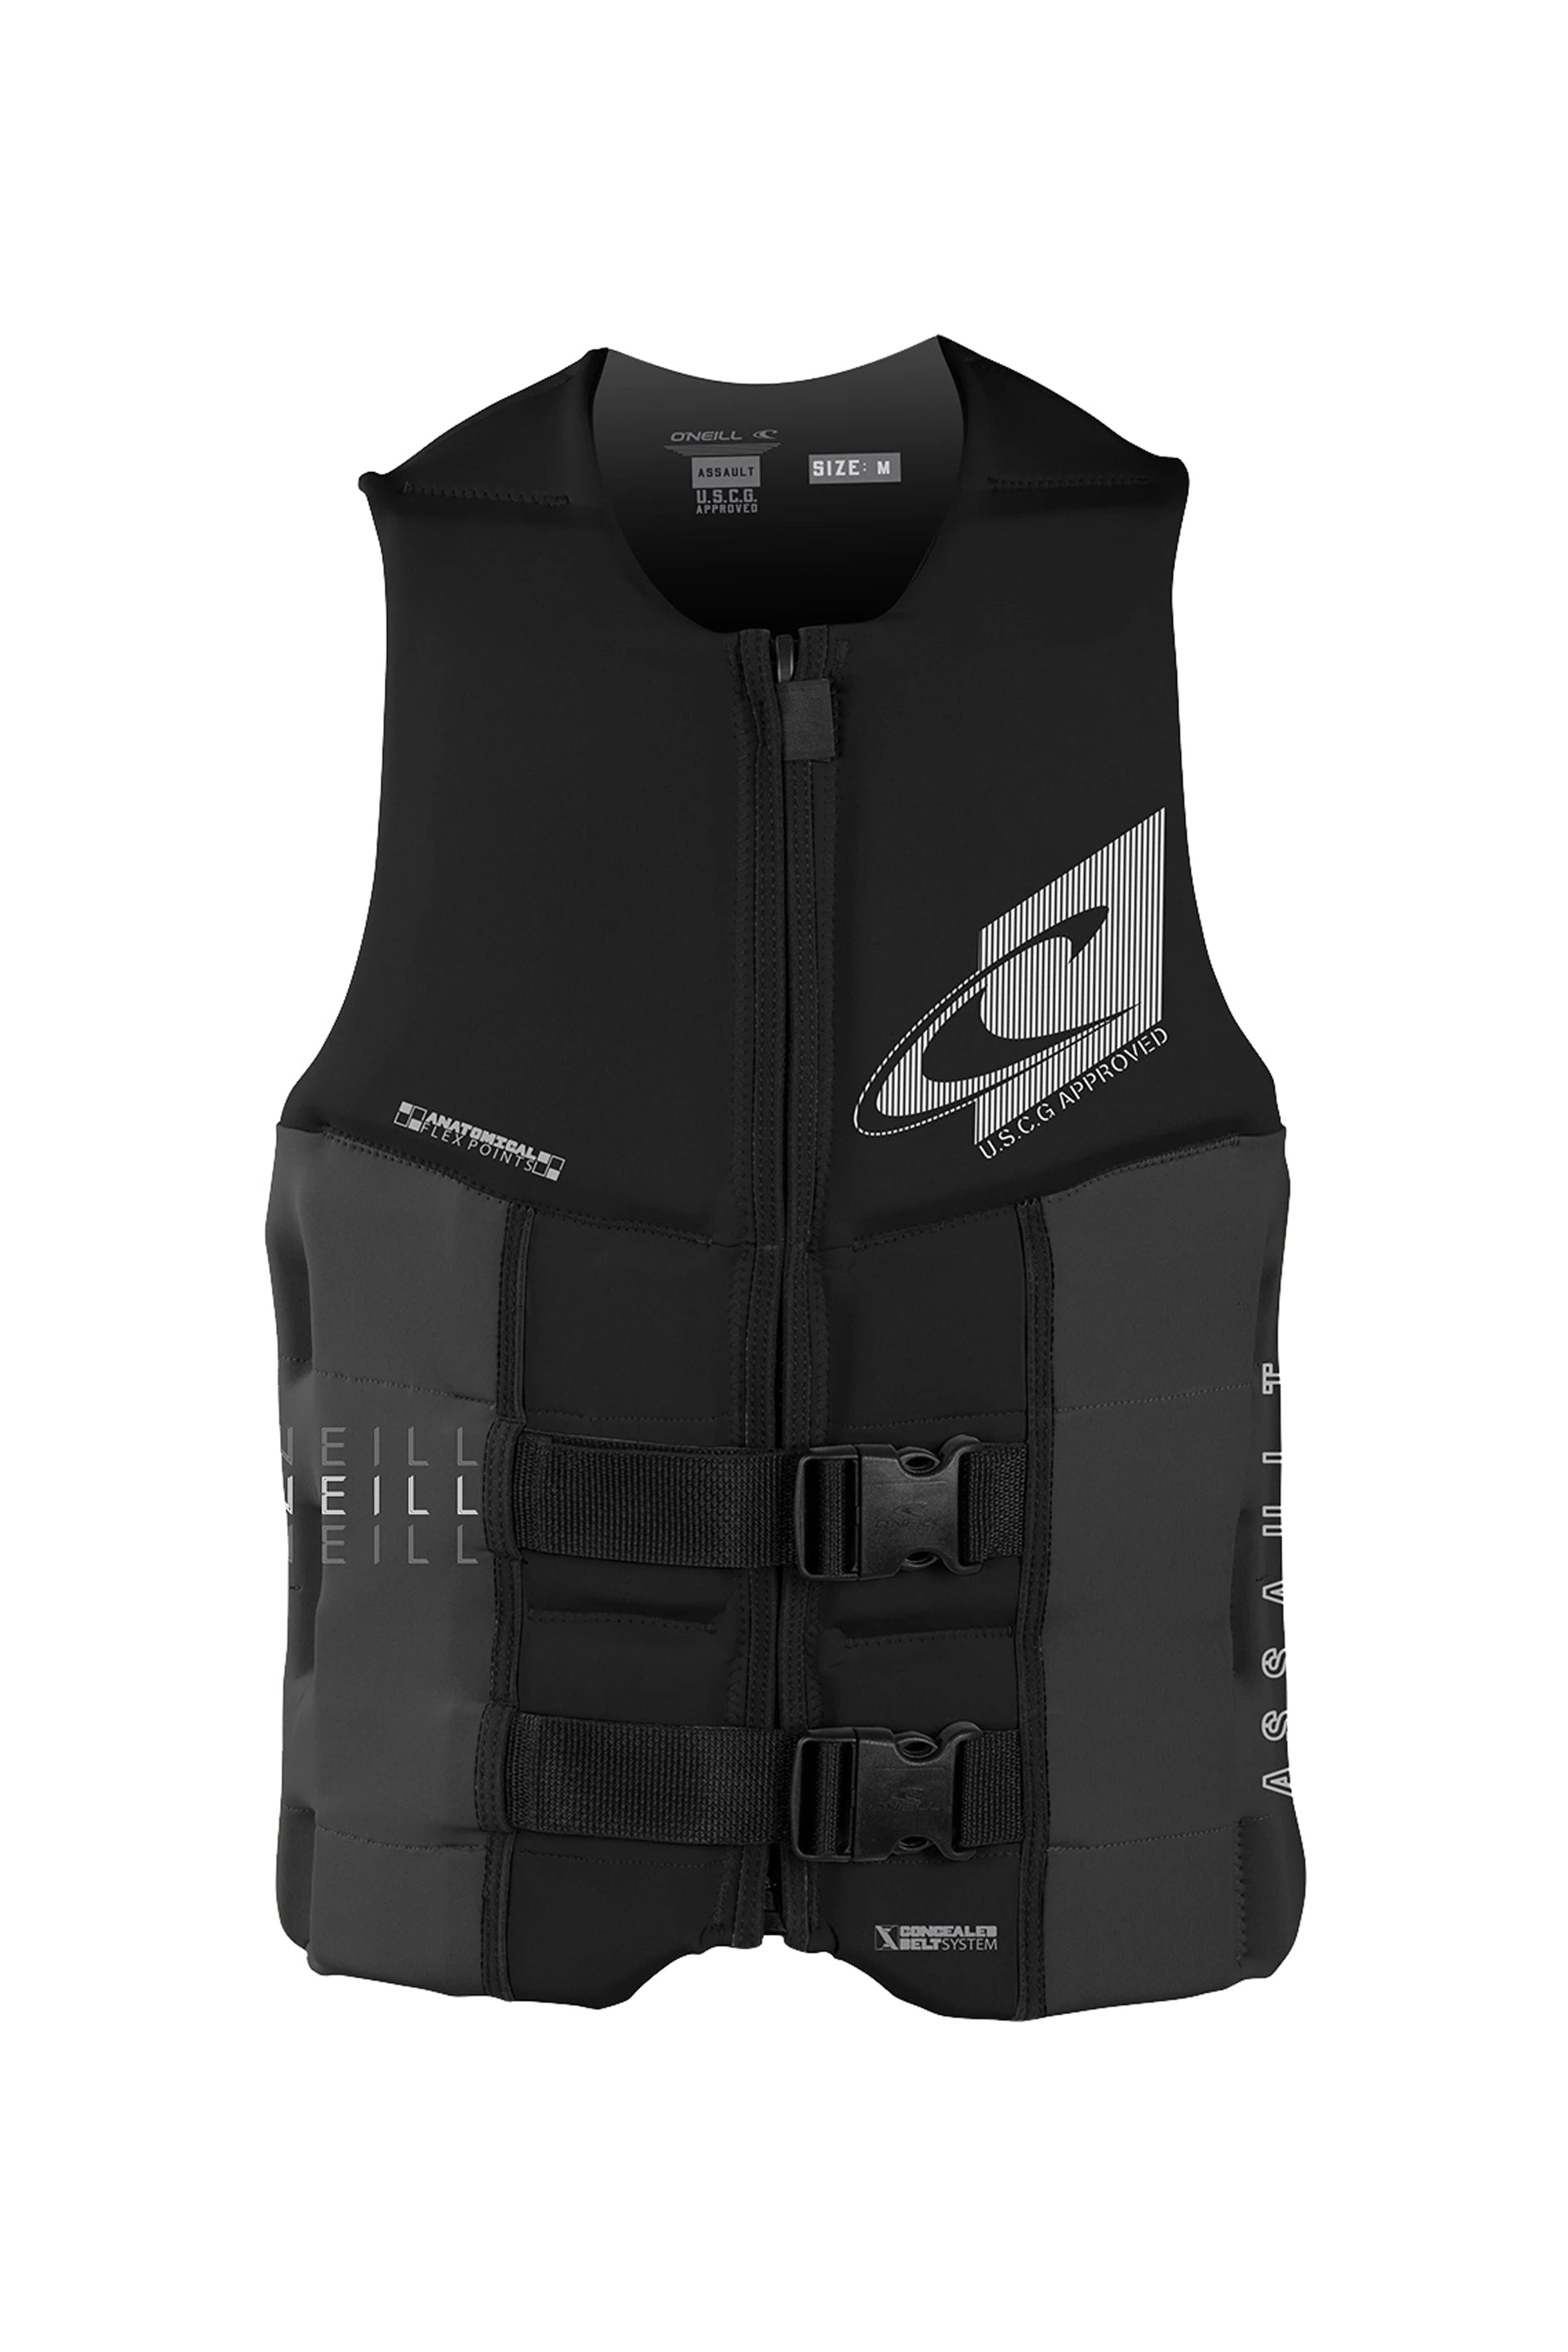 O Neill Assault FZ USCG Life Vest A00-Black-Black L